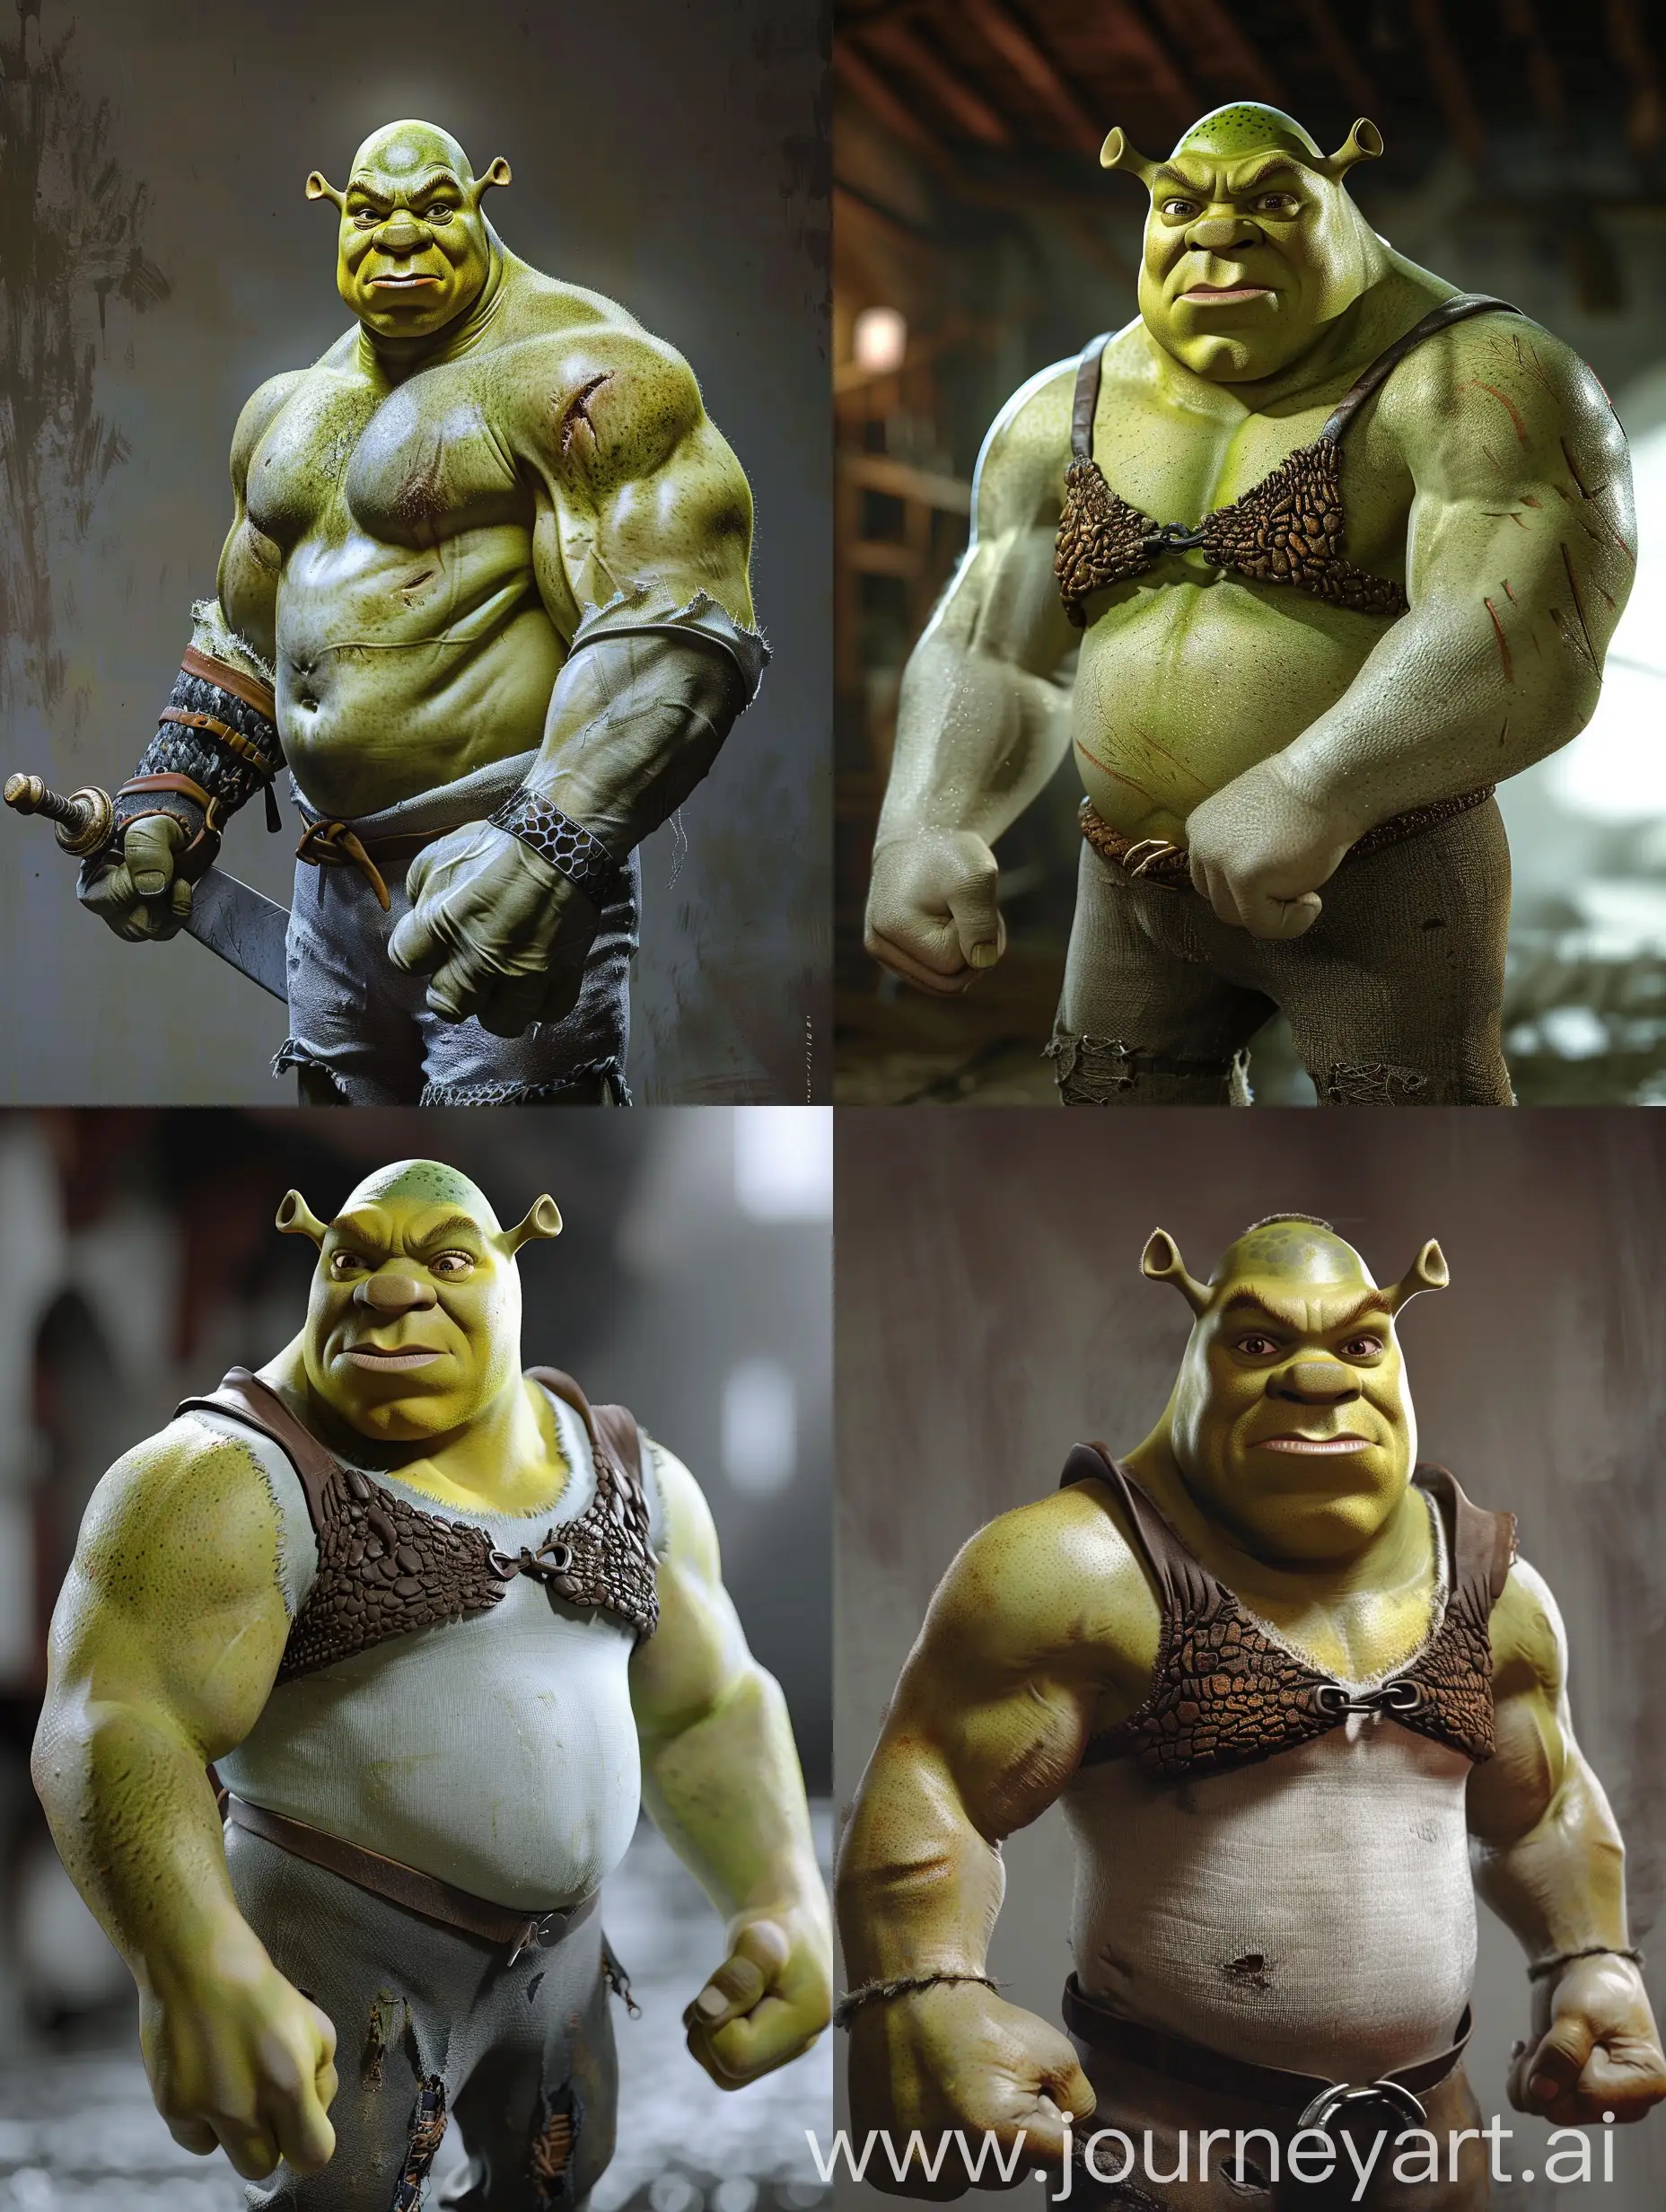 Powerful-MuscleBound-Shrek-in-Dynamic-Pose